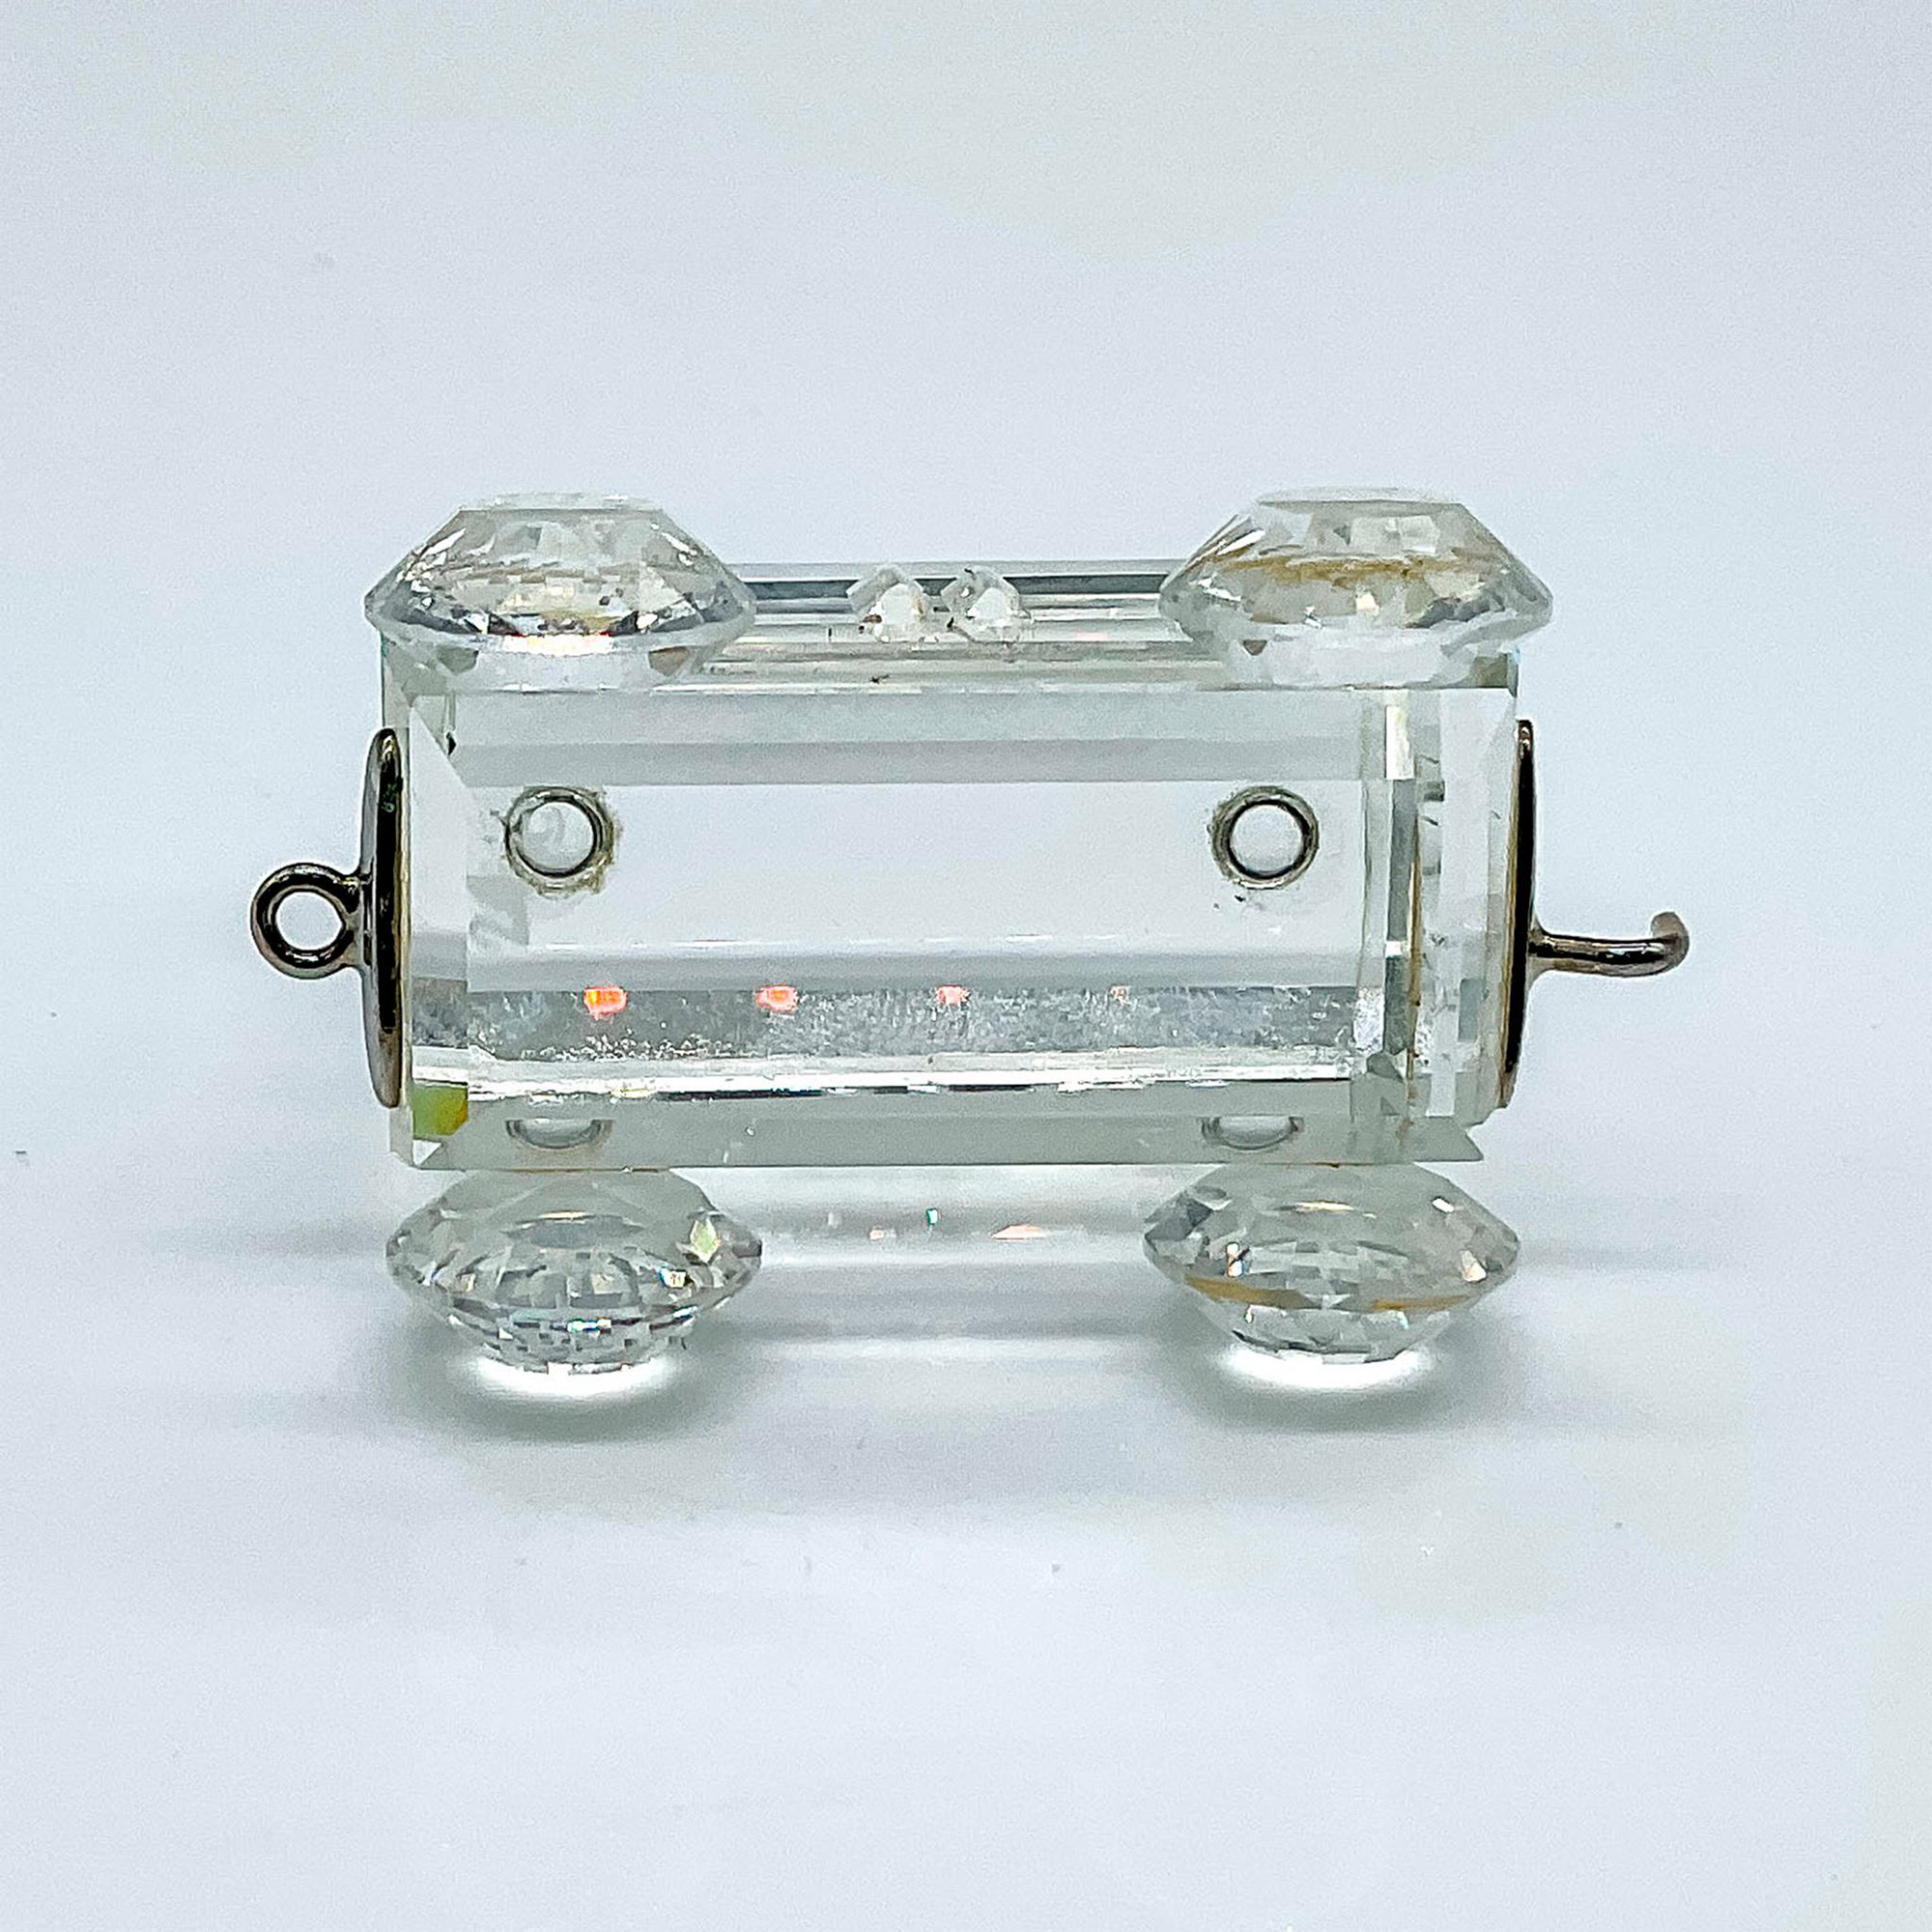 Swarovski Silver Crystal Figurine, Passenger Carriage - Image 3 of 4